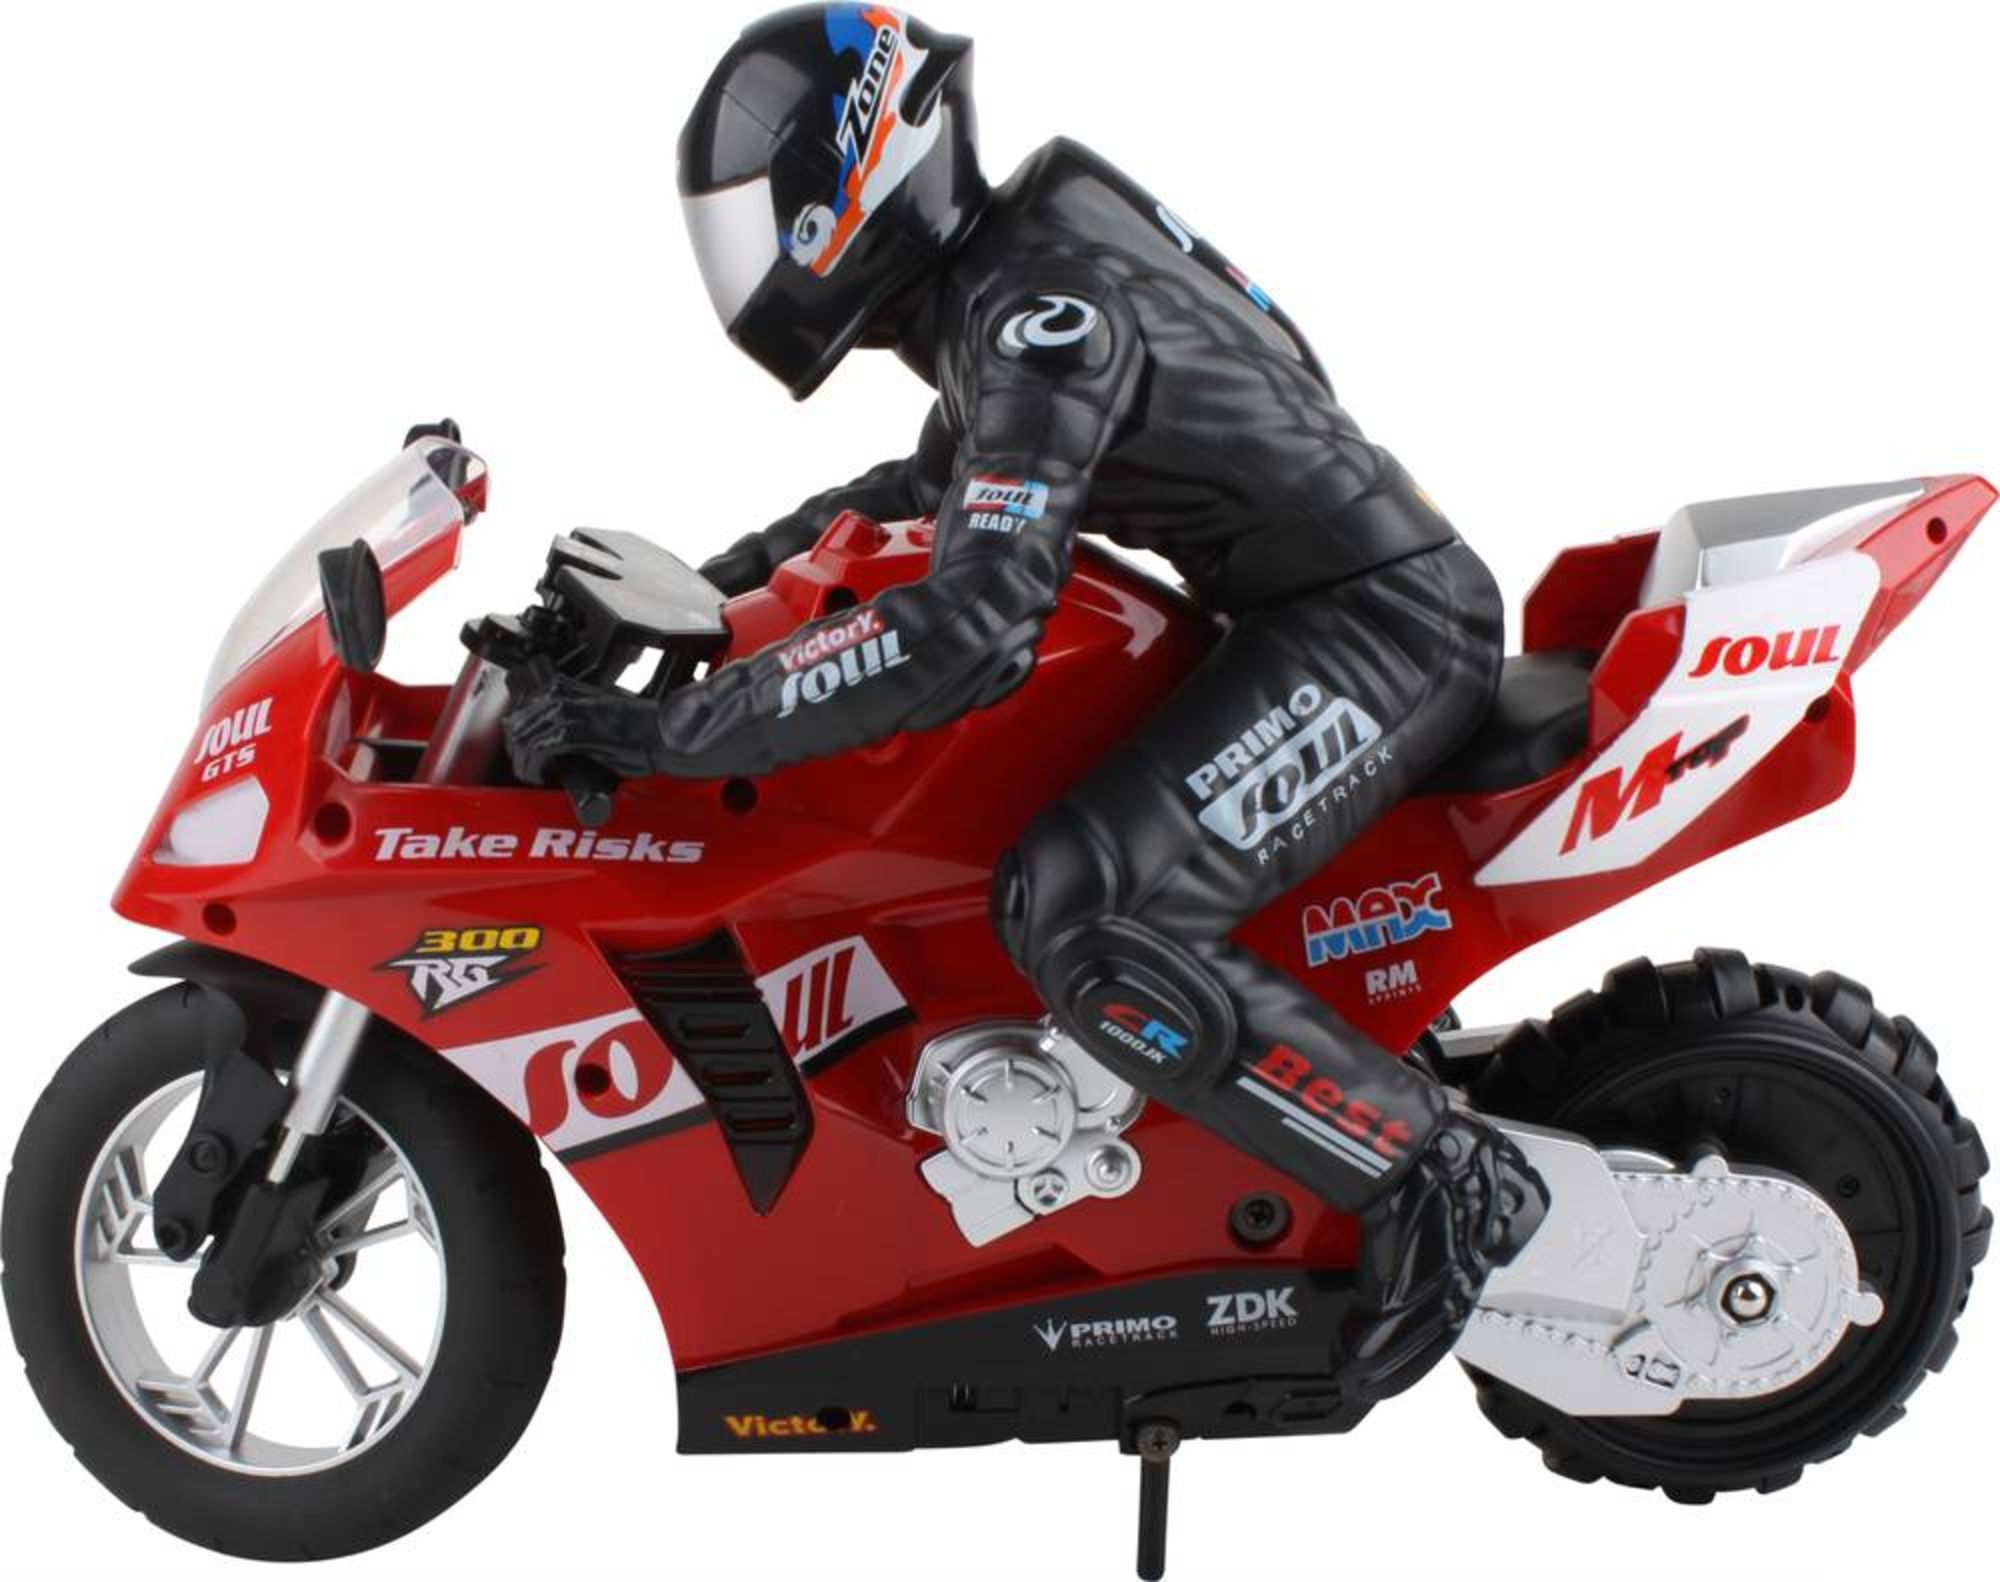 2436324 Stunt motorcycle 1:6 RC Einsteiger Motorrad Motorrad inkl